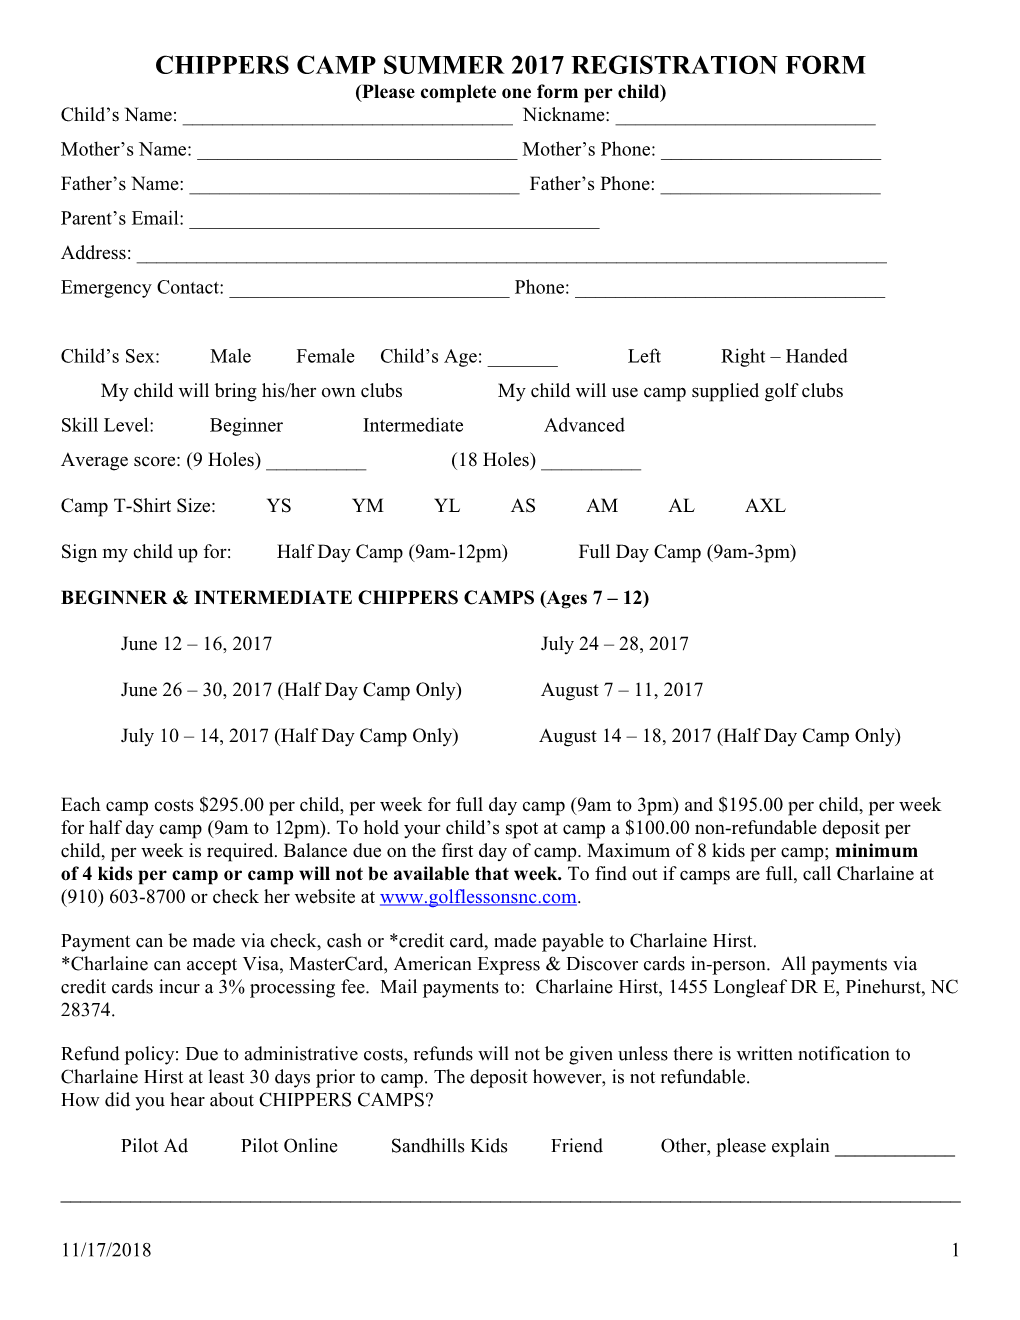 Chippers Camp Summer 2017Registration Form